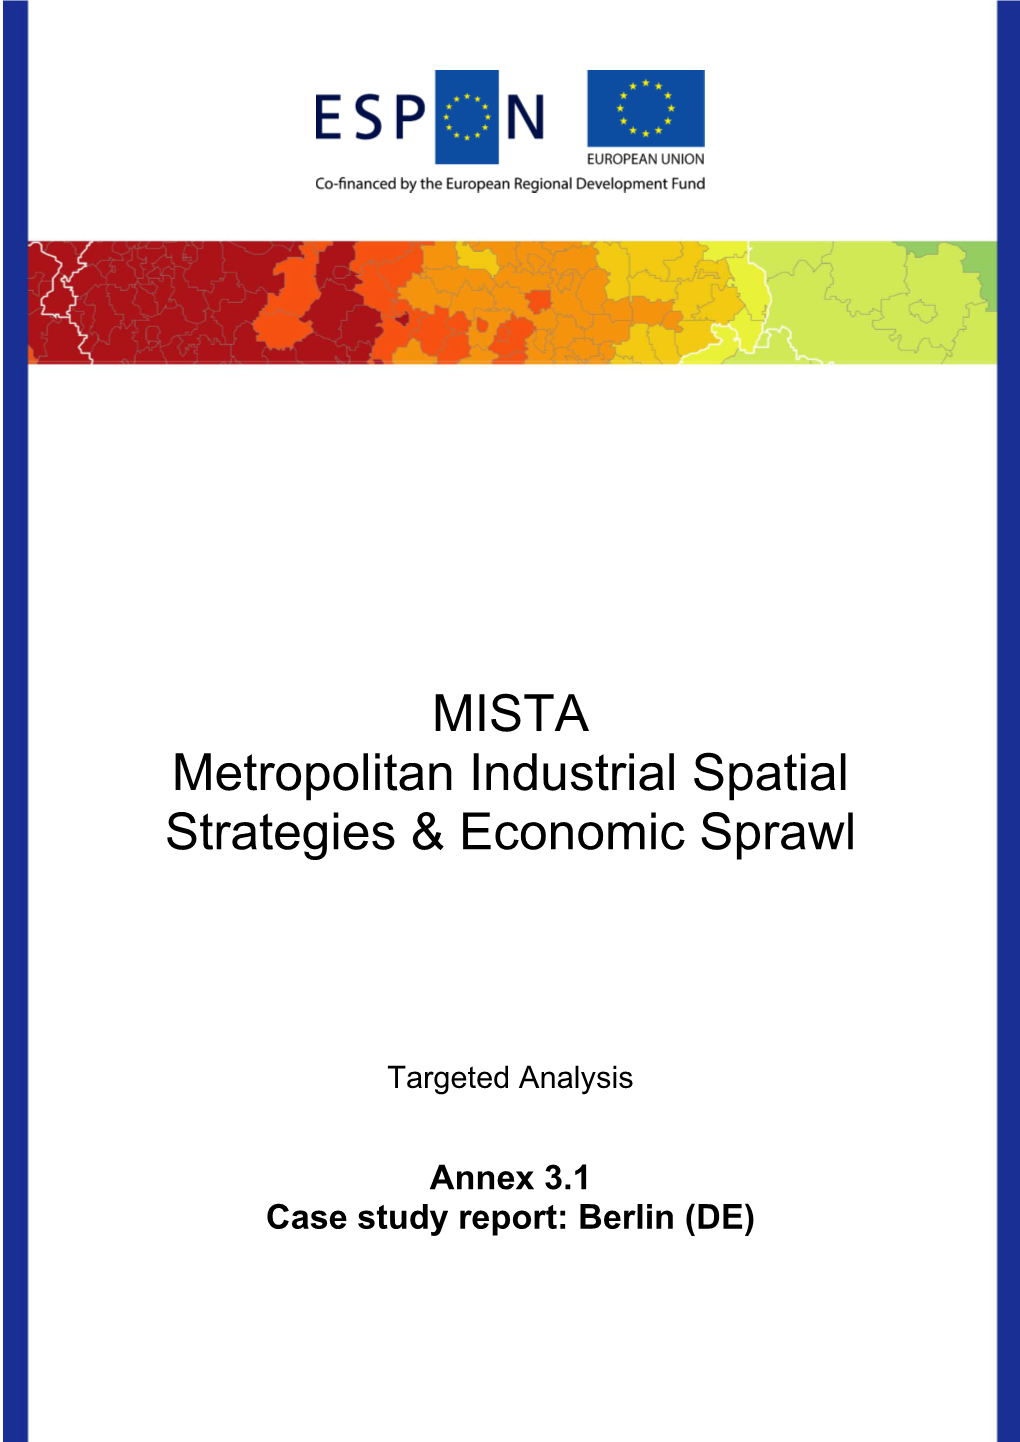 MISTA Metropolitan Industrial Spatial Strategies & Economic Sprawl